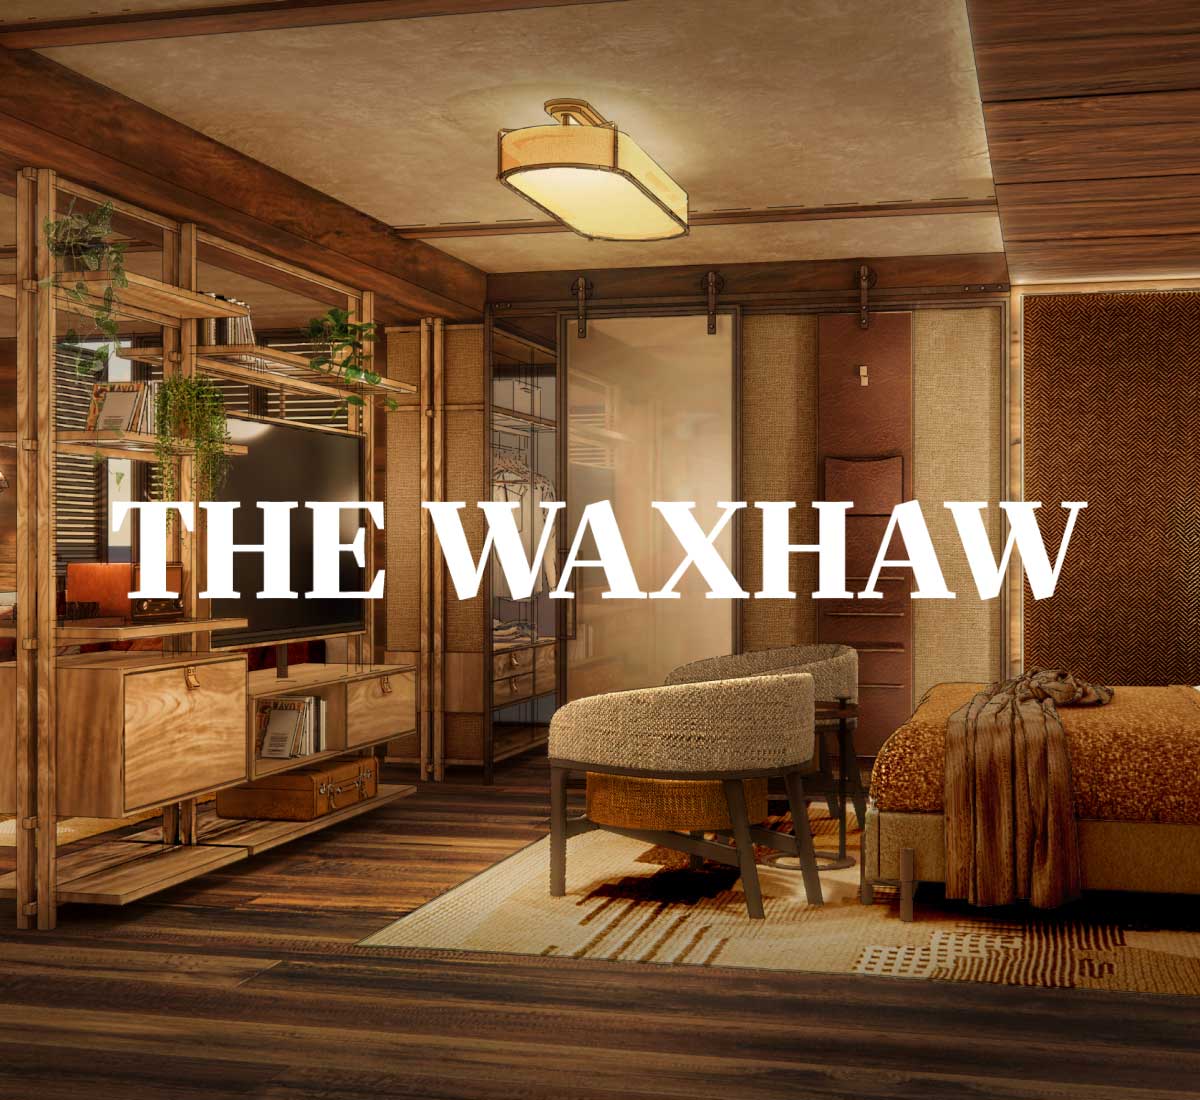 THE WAXHAW, N. CAROLINA